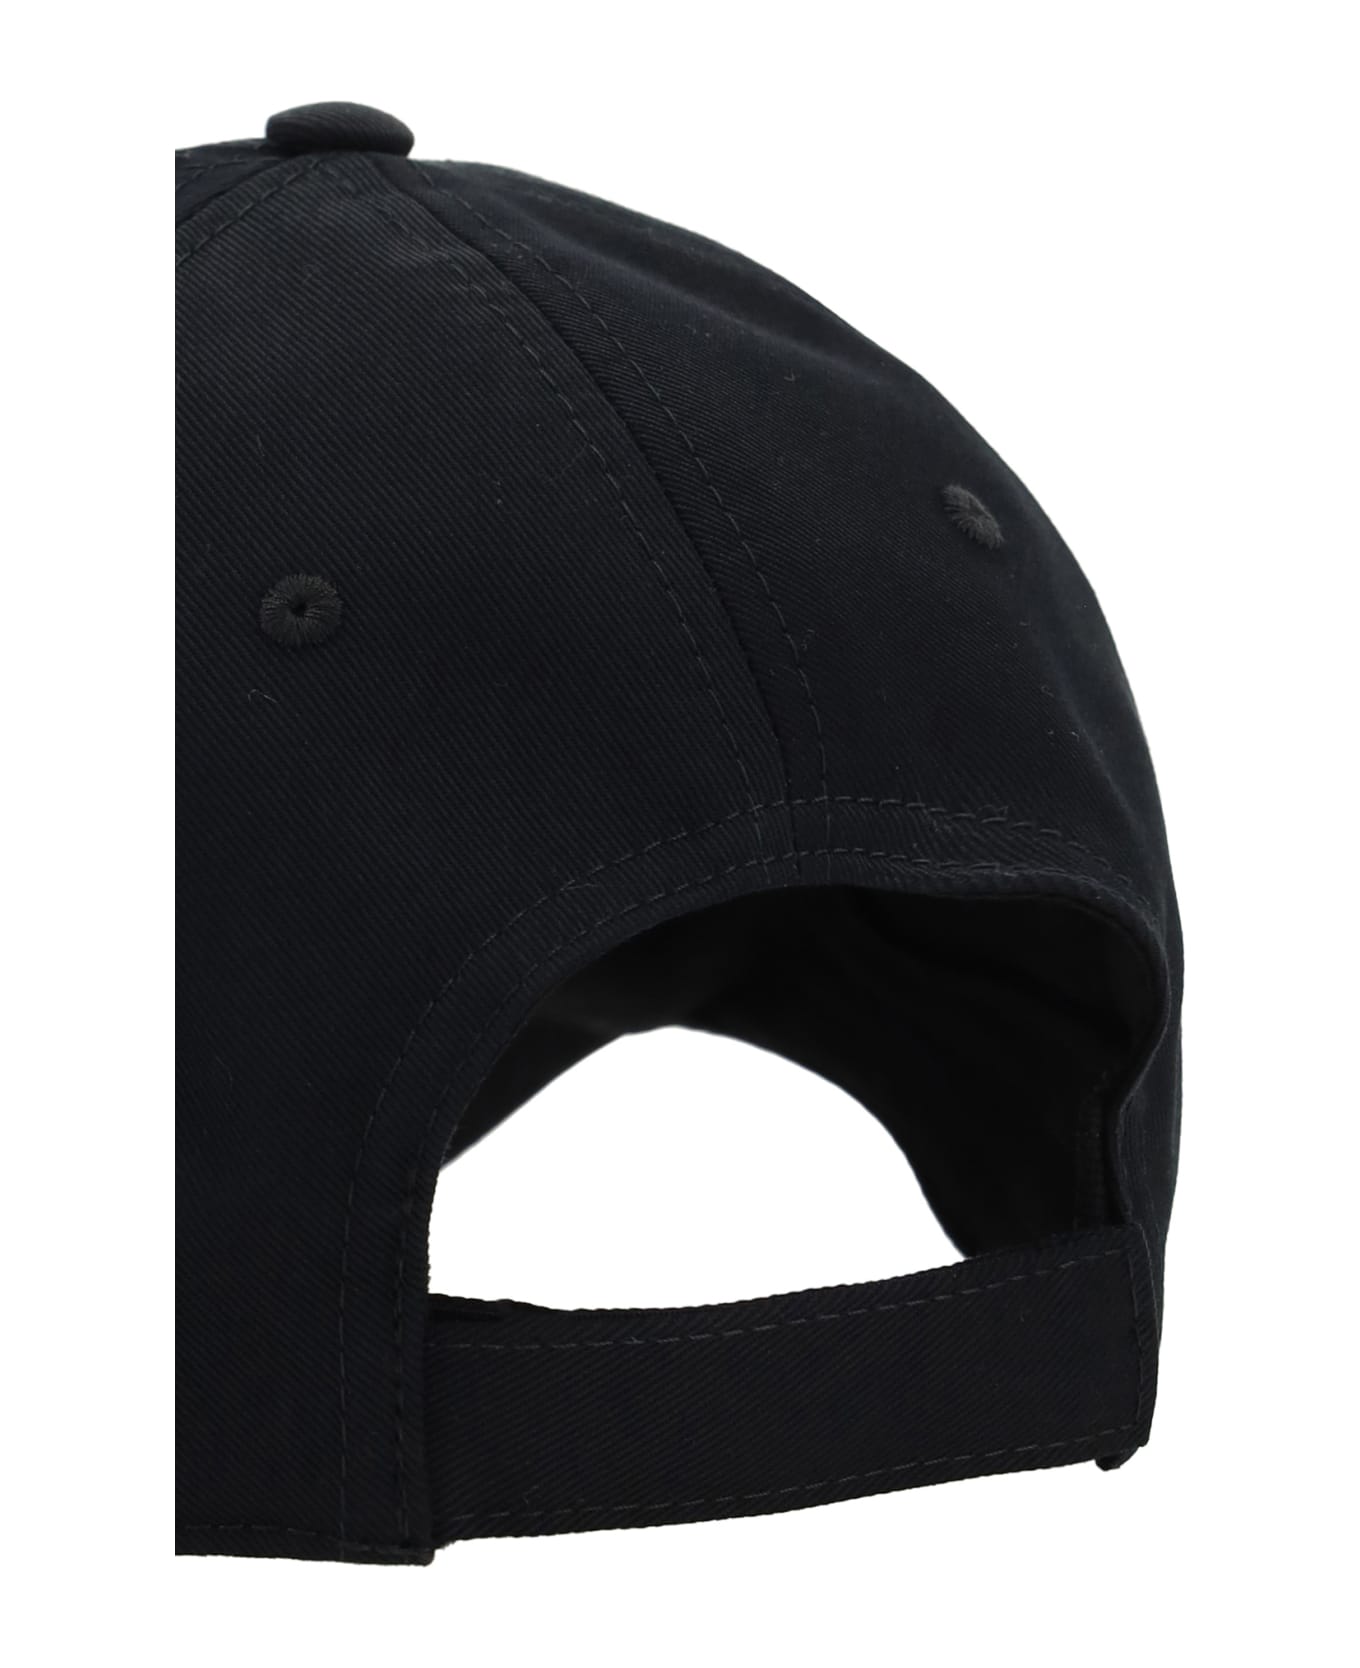 Marni Baseball Hat - Black 帽子